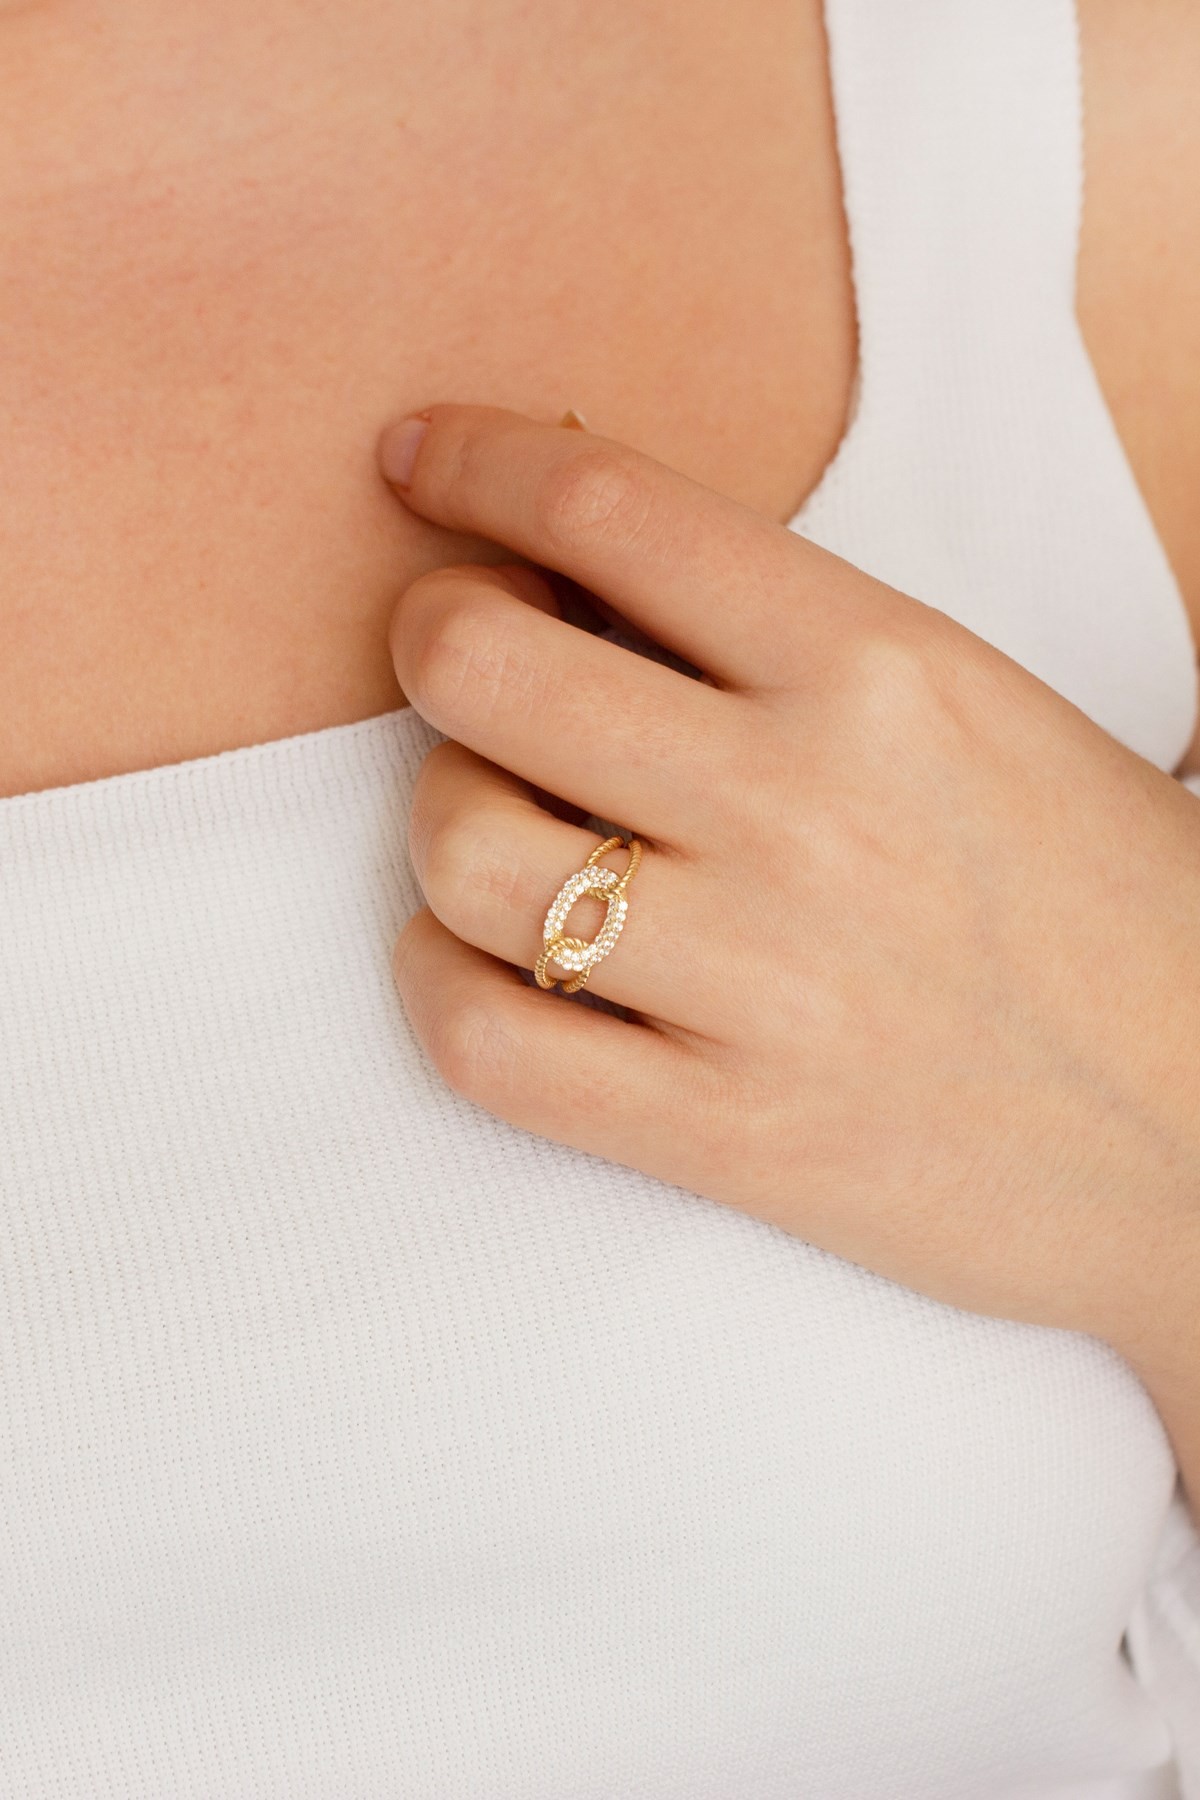 14 Carat Gold Infinity Design Ring